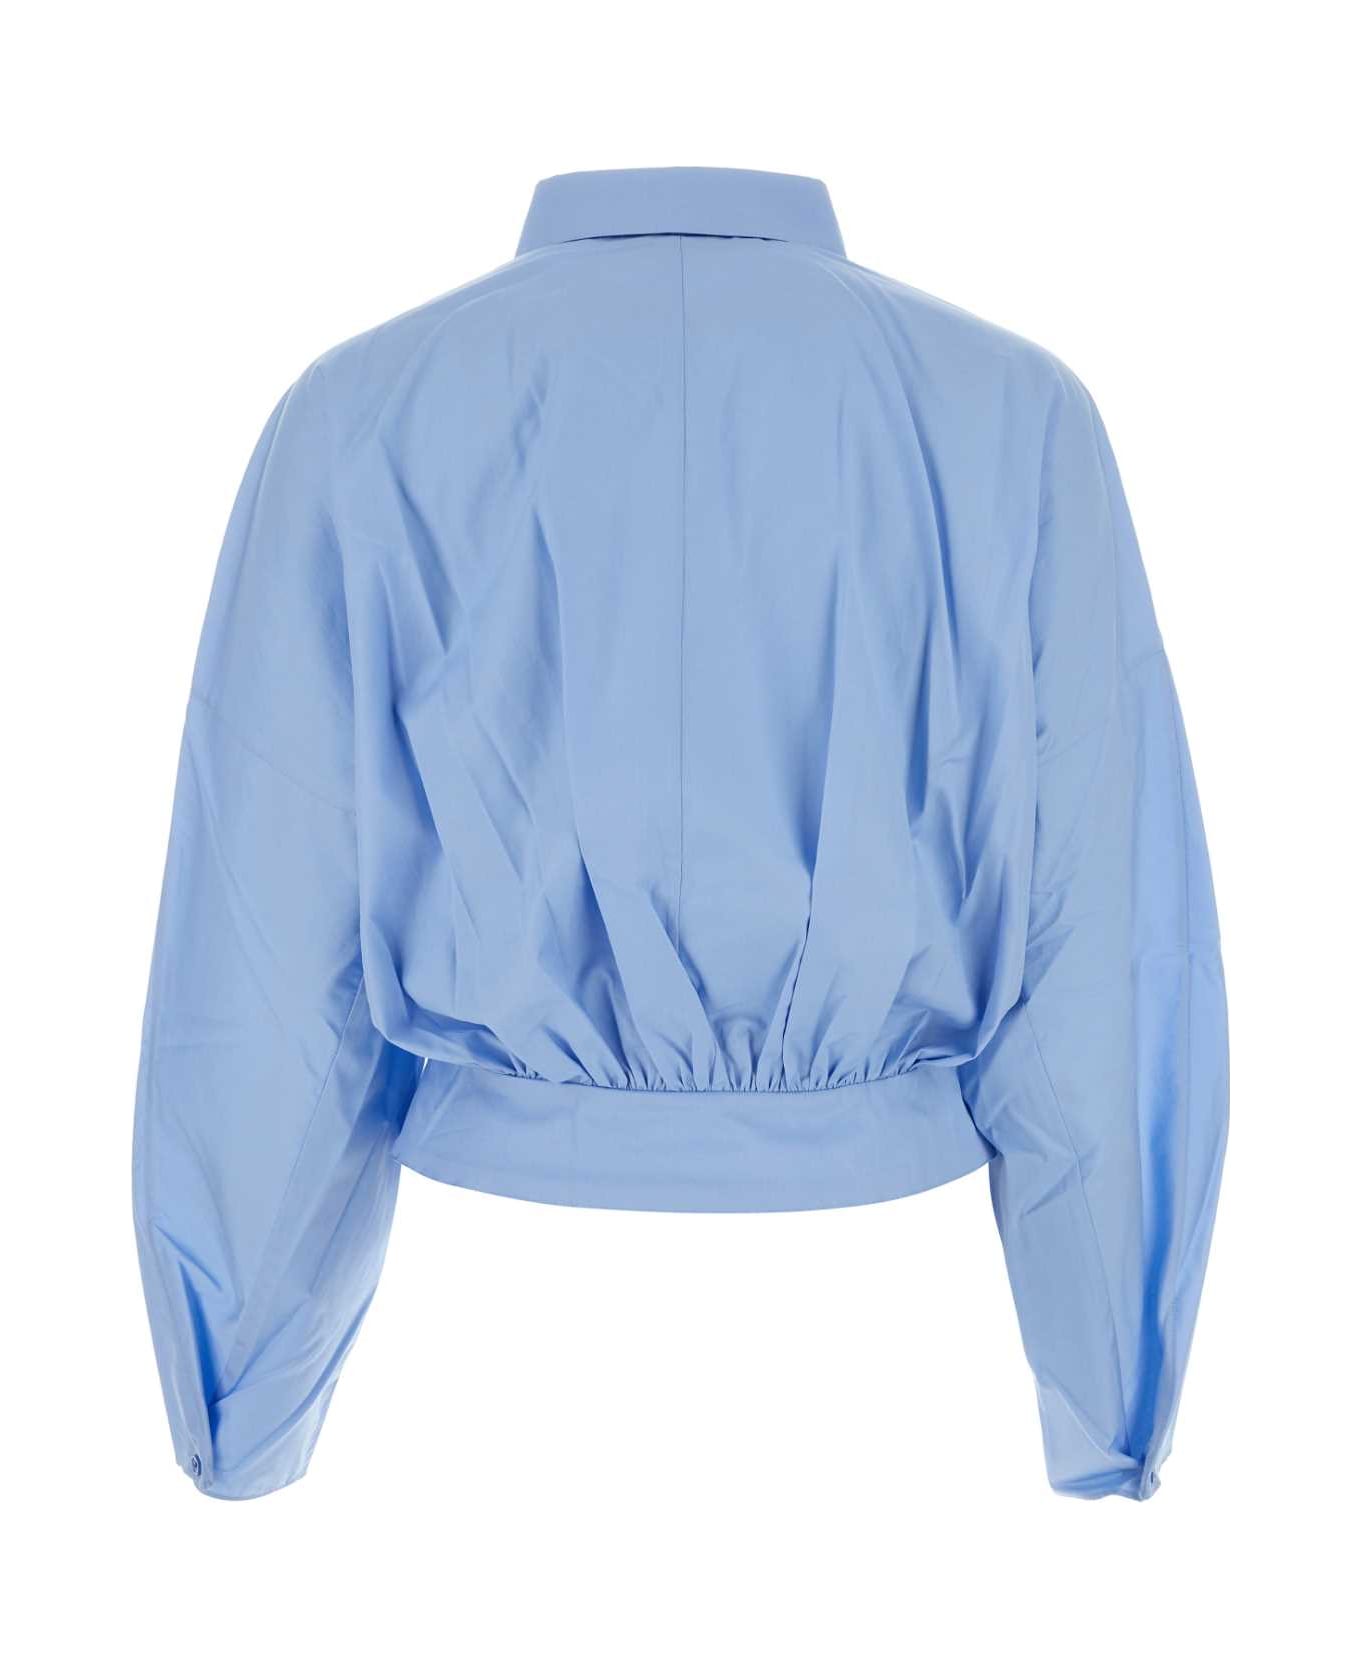 Marni Light Blue Poplin Shirt - IRISBLUE